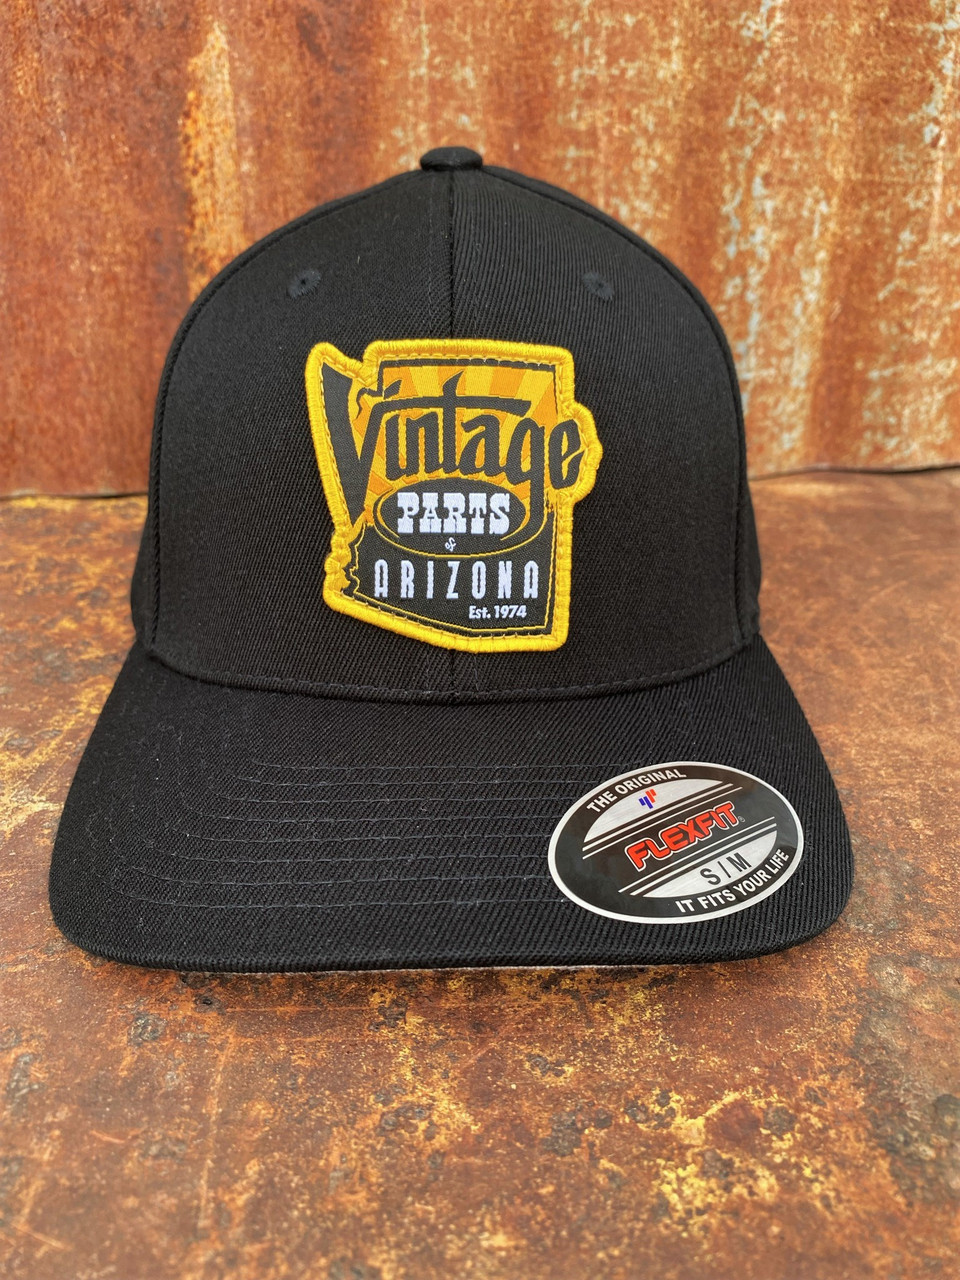 VPA Logo Flex Fit Flat Brim Hat-Black - Vintage Parts of Arizona